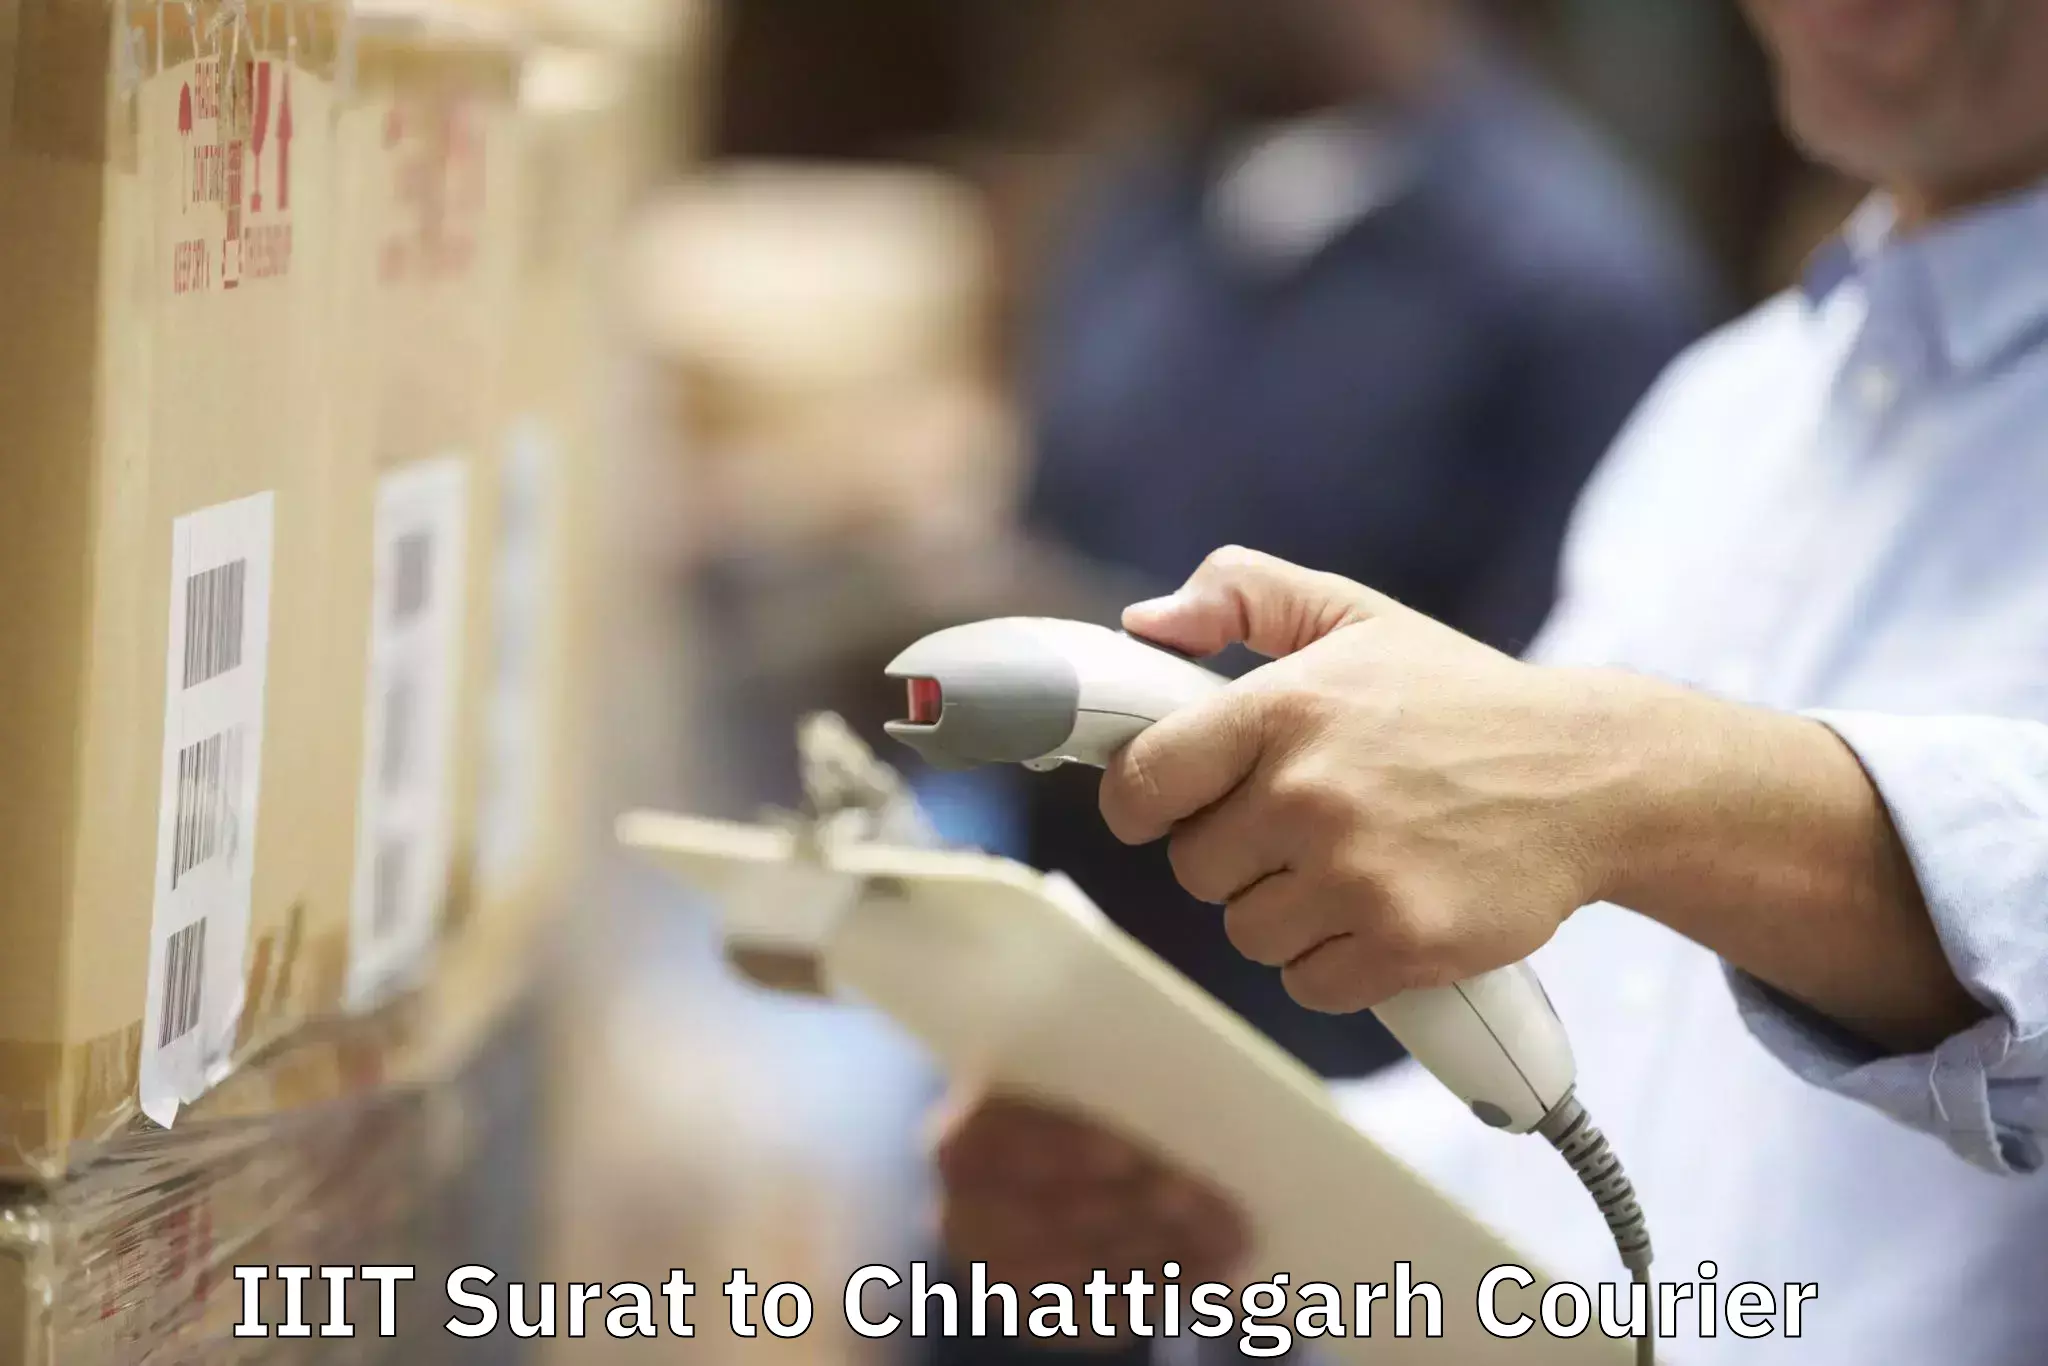 Specialized moving company IIIT Surat to Patna Chhattisgarh